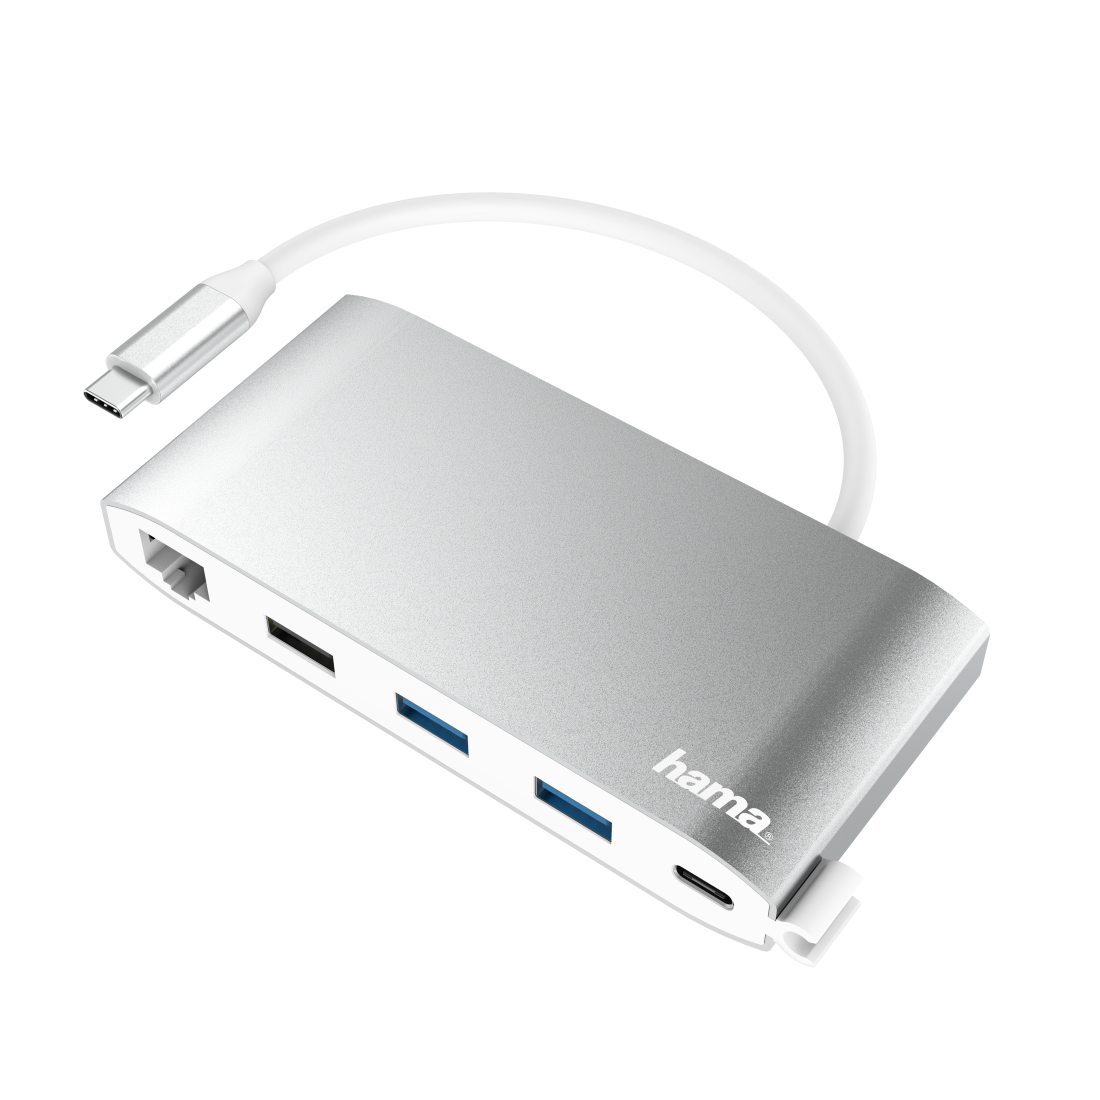 Hub USB-C, multiport, 4 ports, 2 USB-A, USB-C, LAN/Ether.